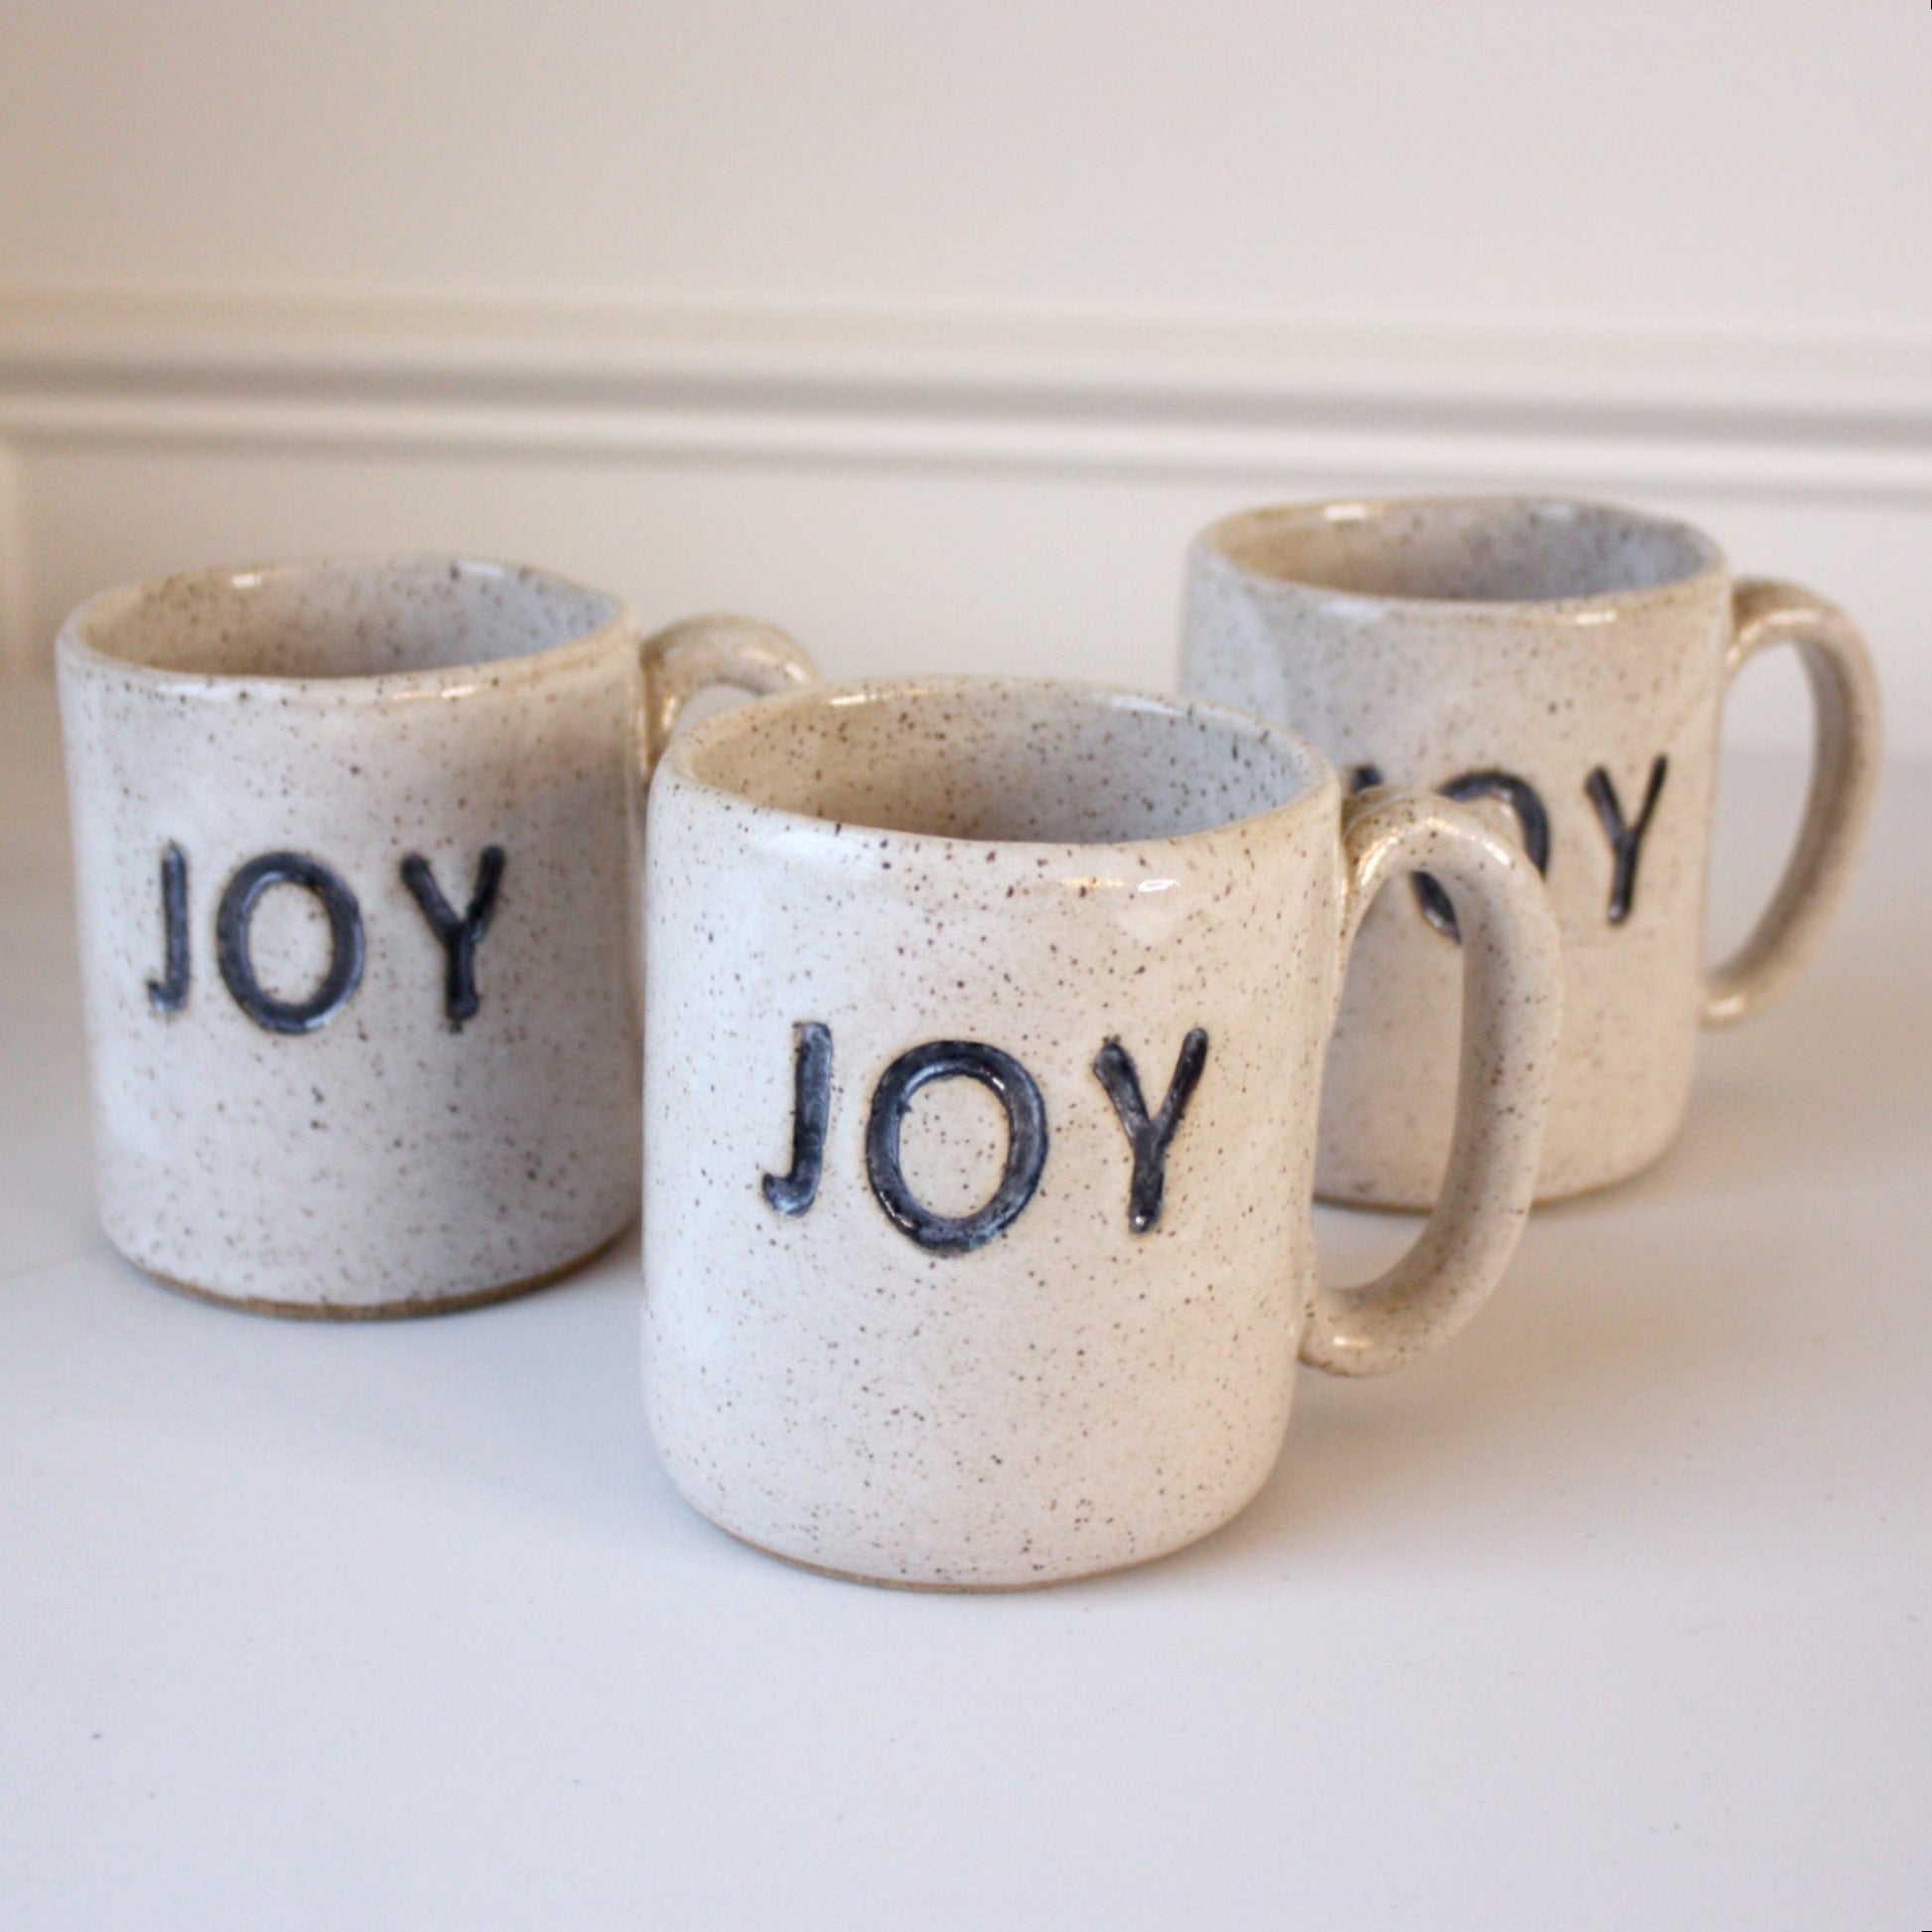 Joy Ceramic Mug - Made in the USA